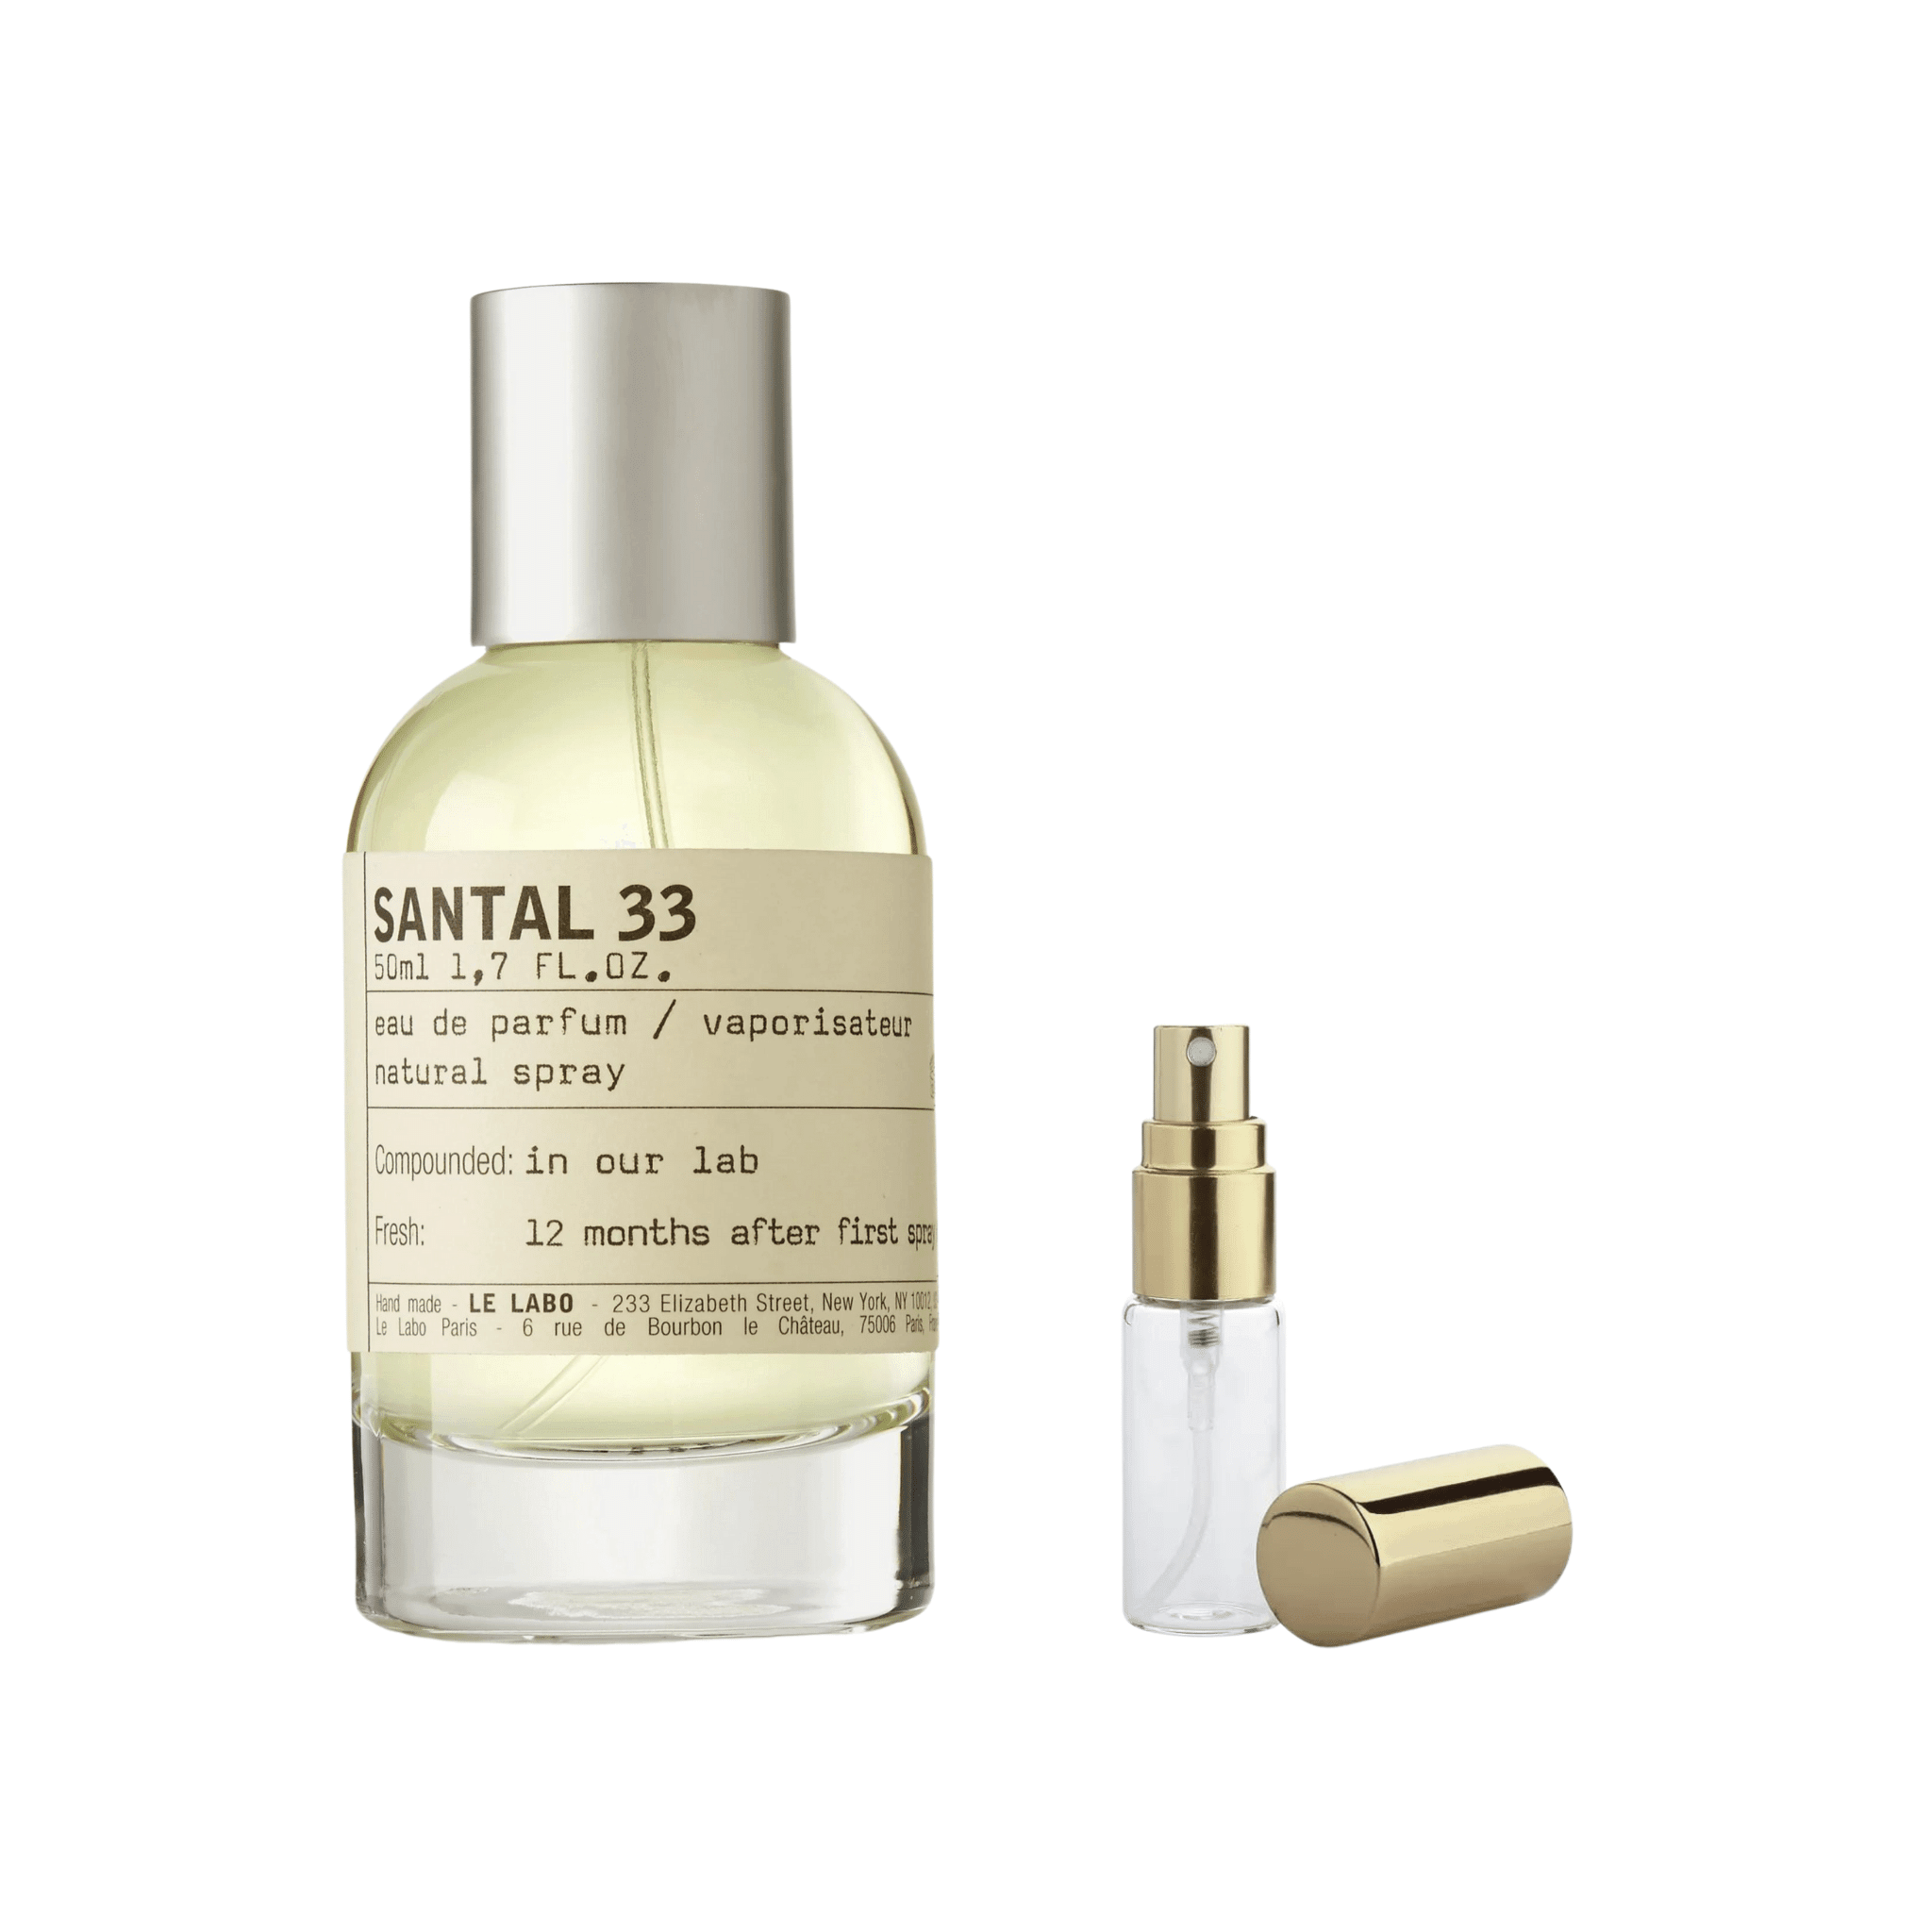 Santal 33 by Le Labo fine fragrance decant sample size travel atomizer